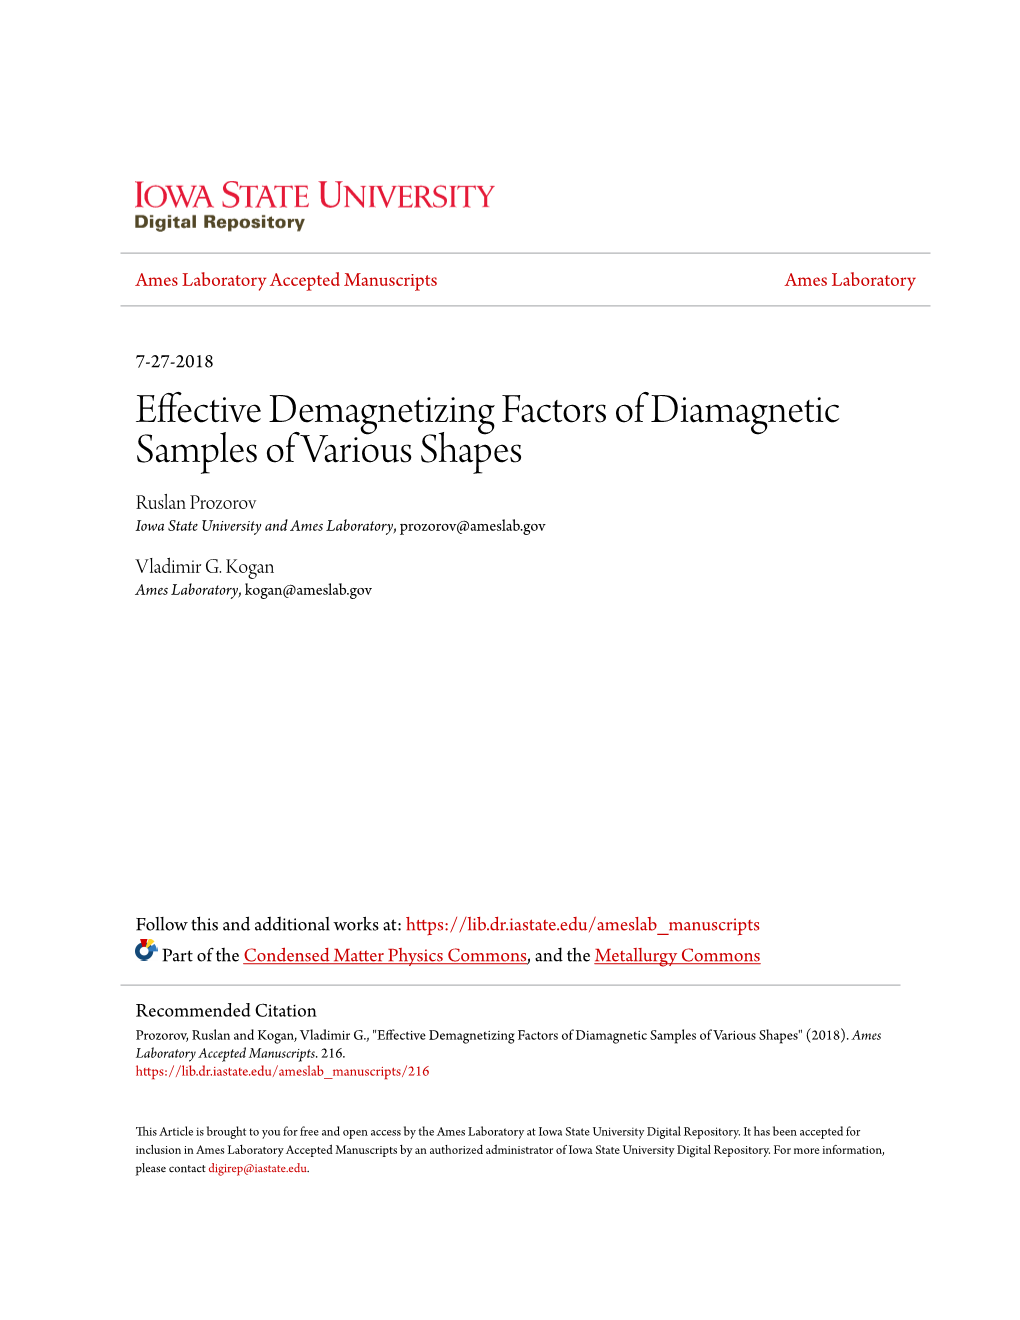 Effective Demagnetizing Factors of Diamagnetic Samples of Various Shapes Ruslan Prozorov Iowa State University and Ames Laboratory, Prozorov@Ameslab.Gov